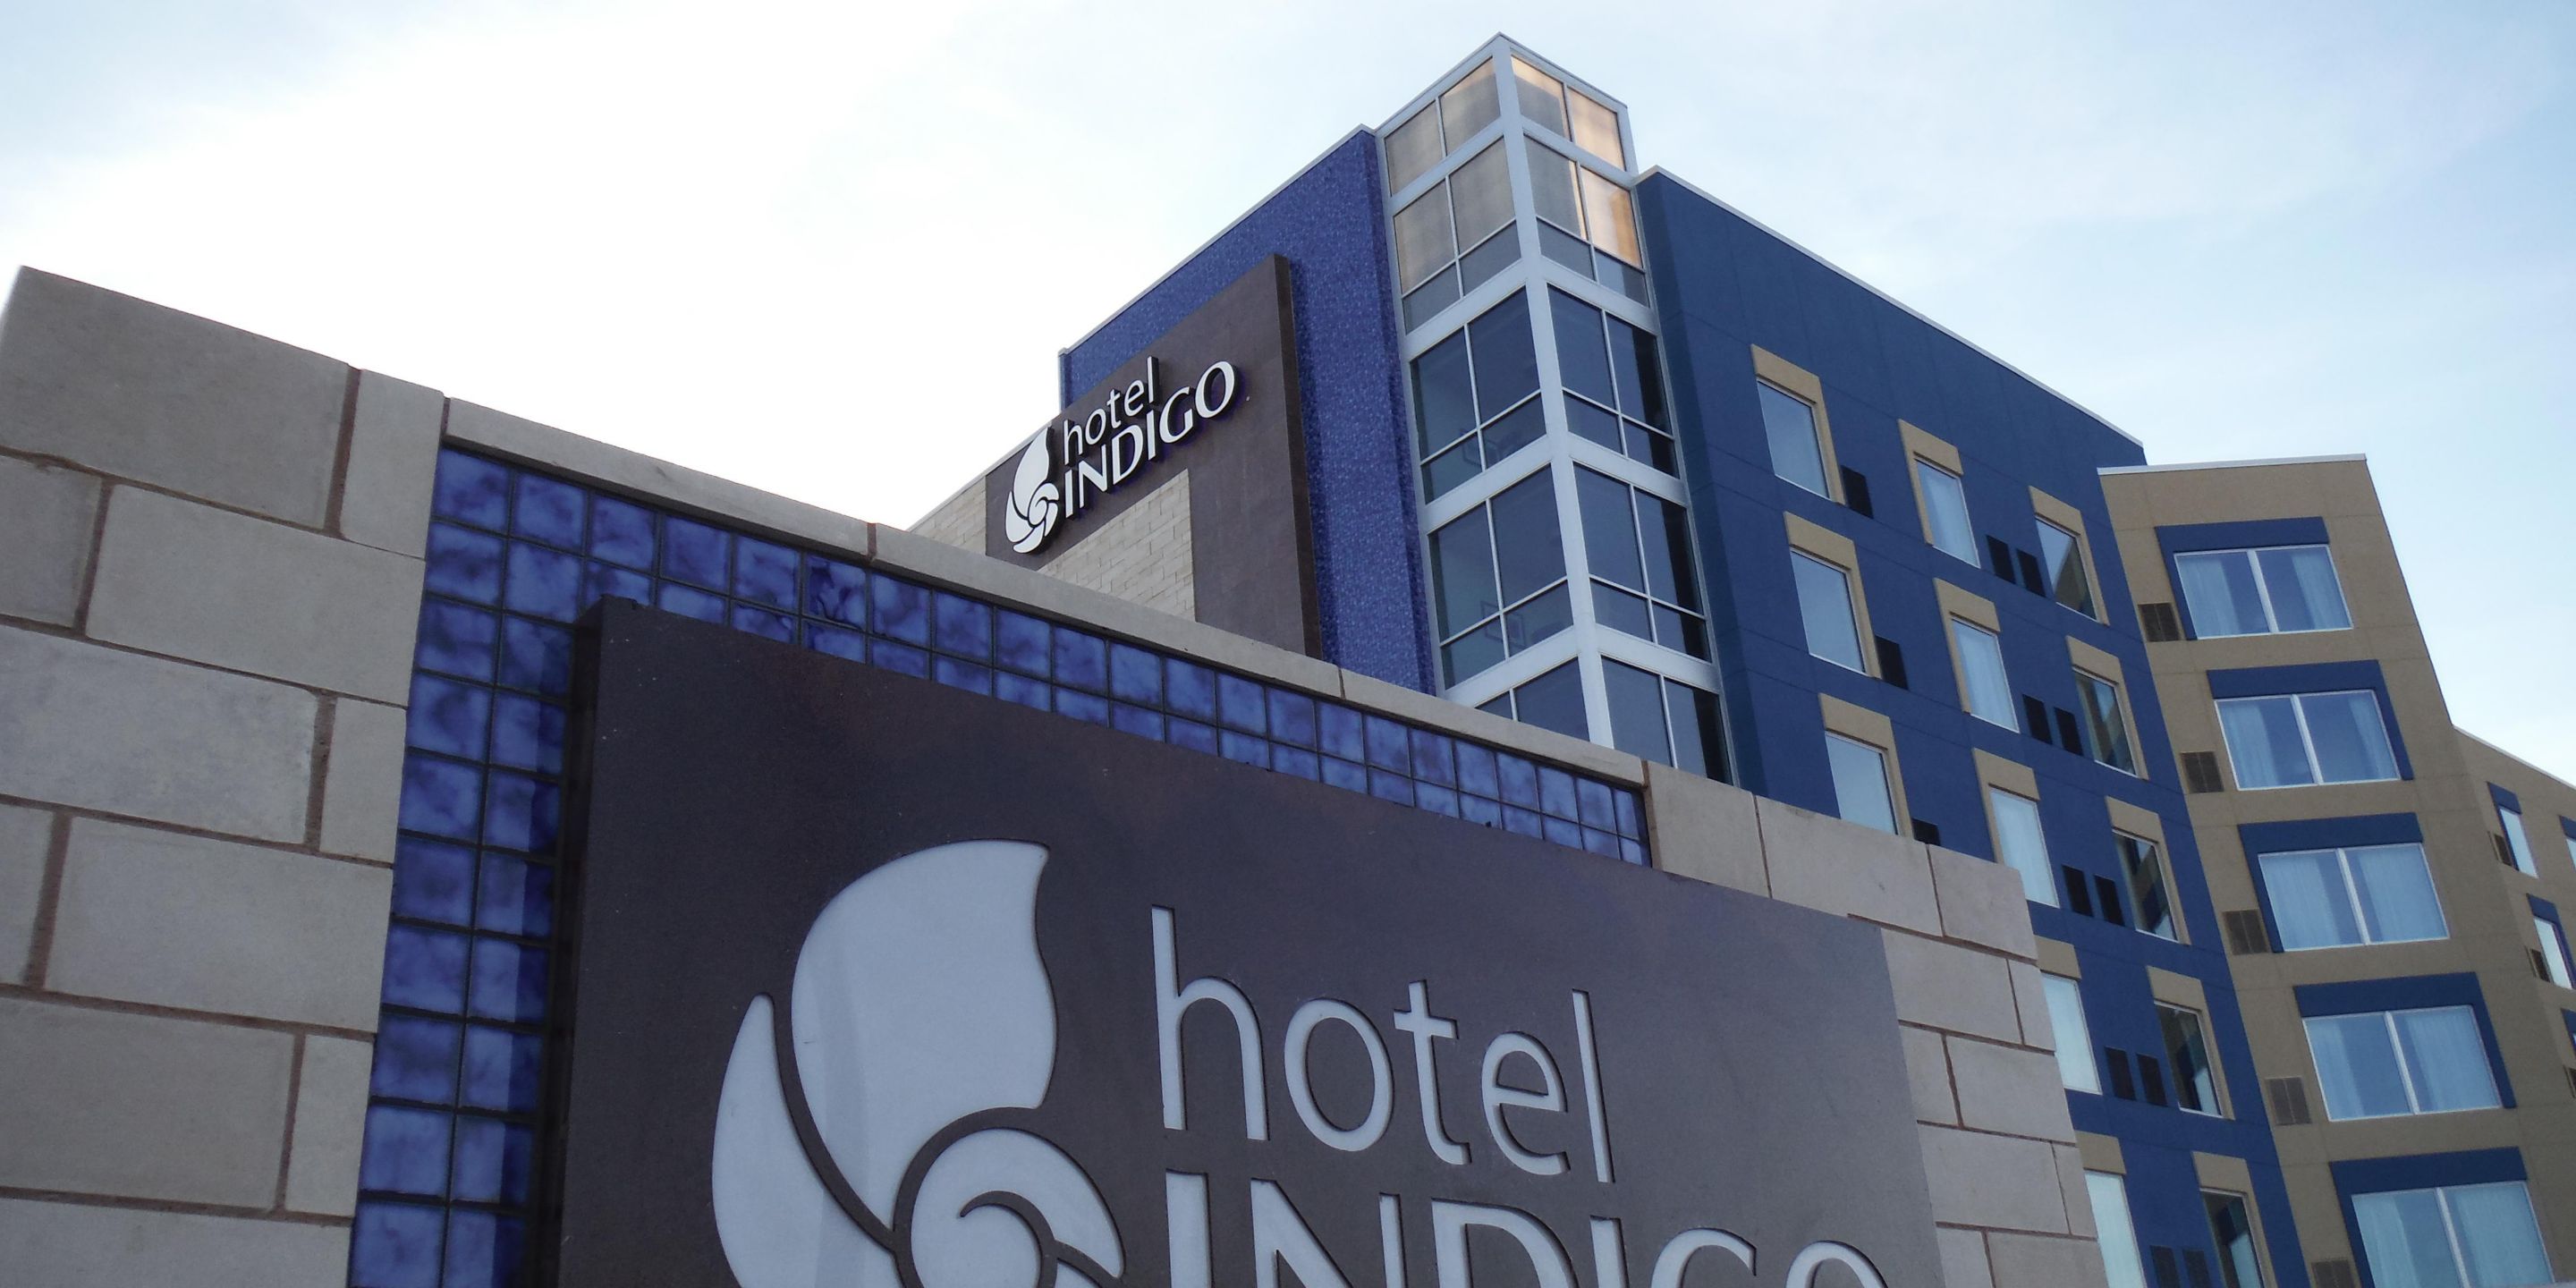 who owns hotel indigo